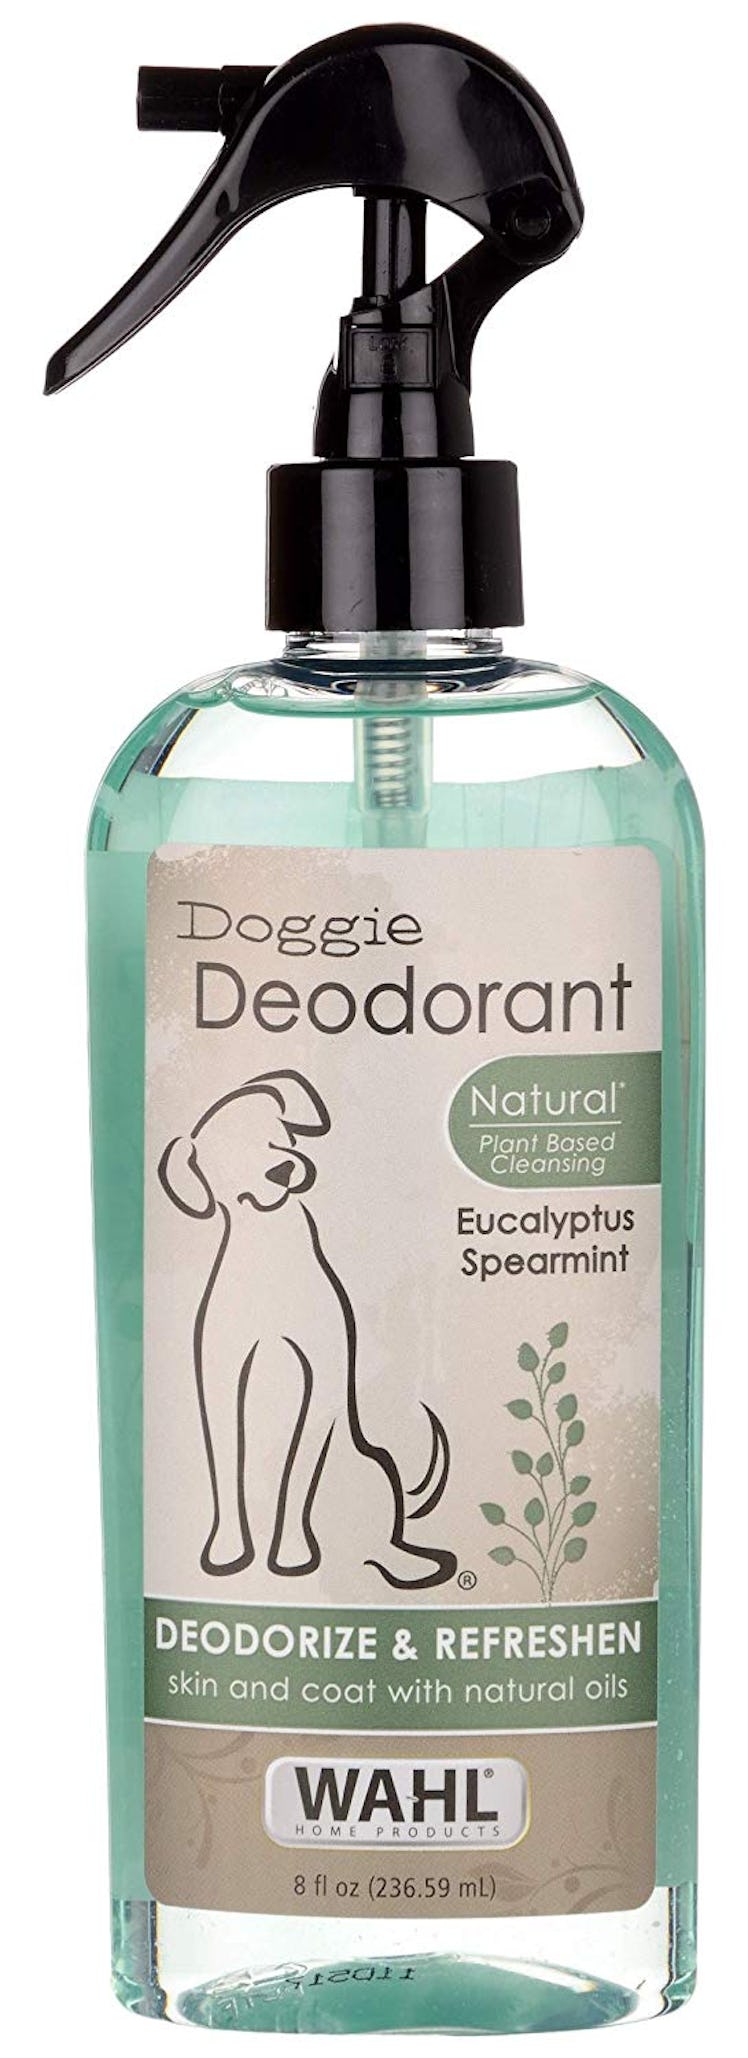 WAHL Dog/Pet Deodorant Spray, Eucalyptus and Spearmint